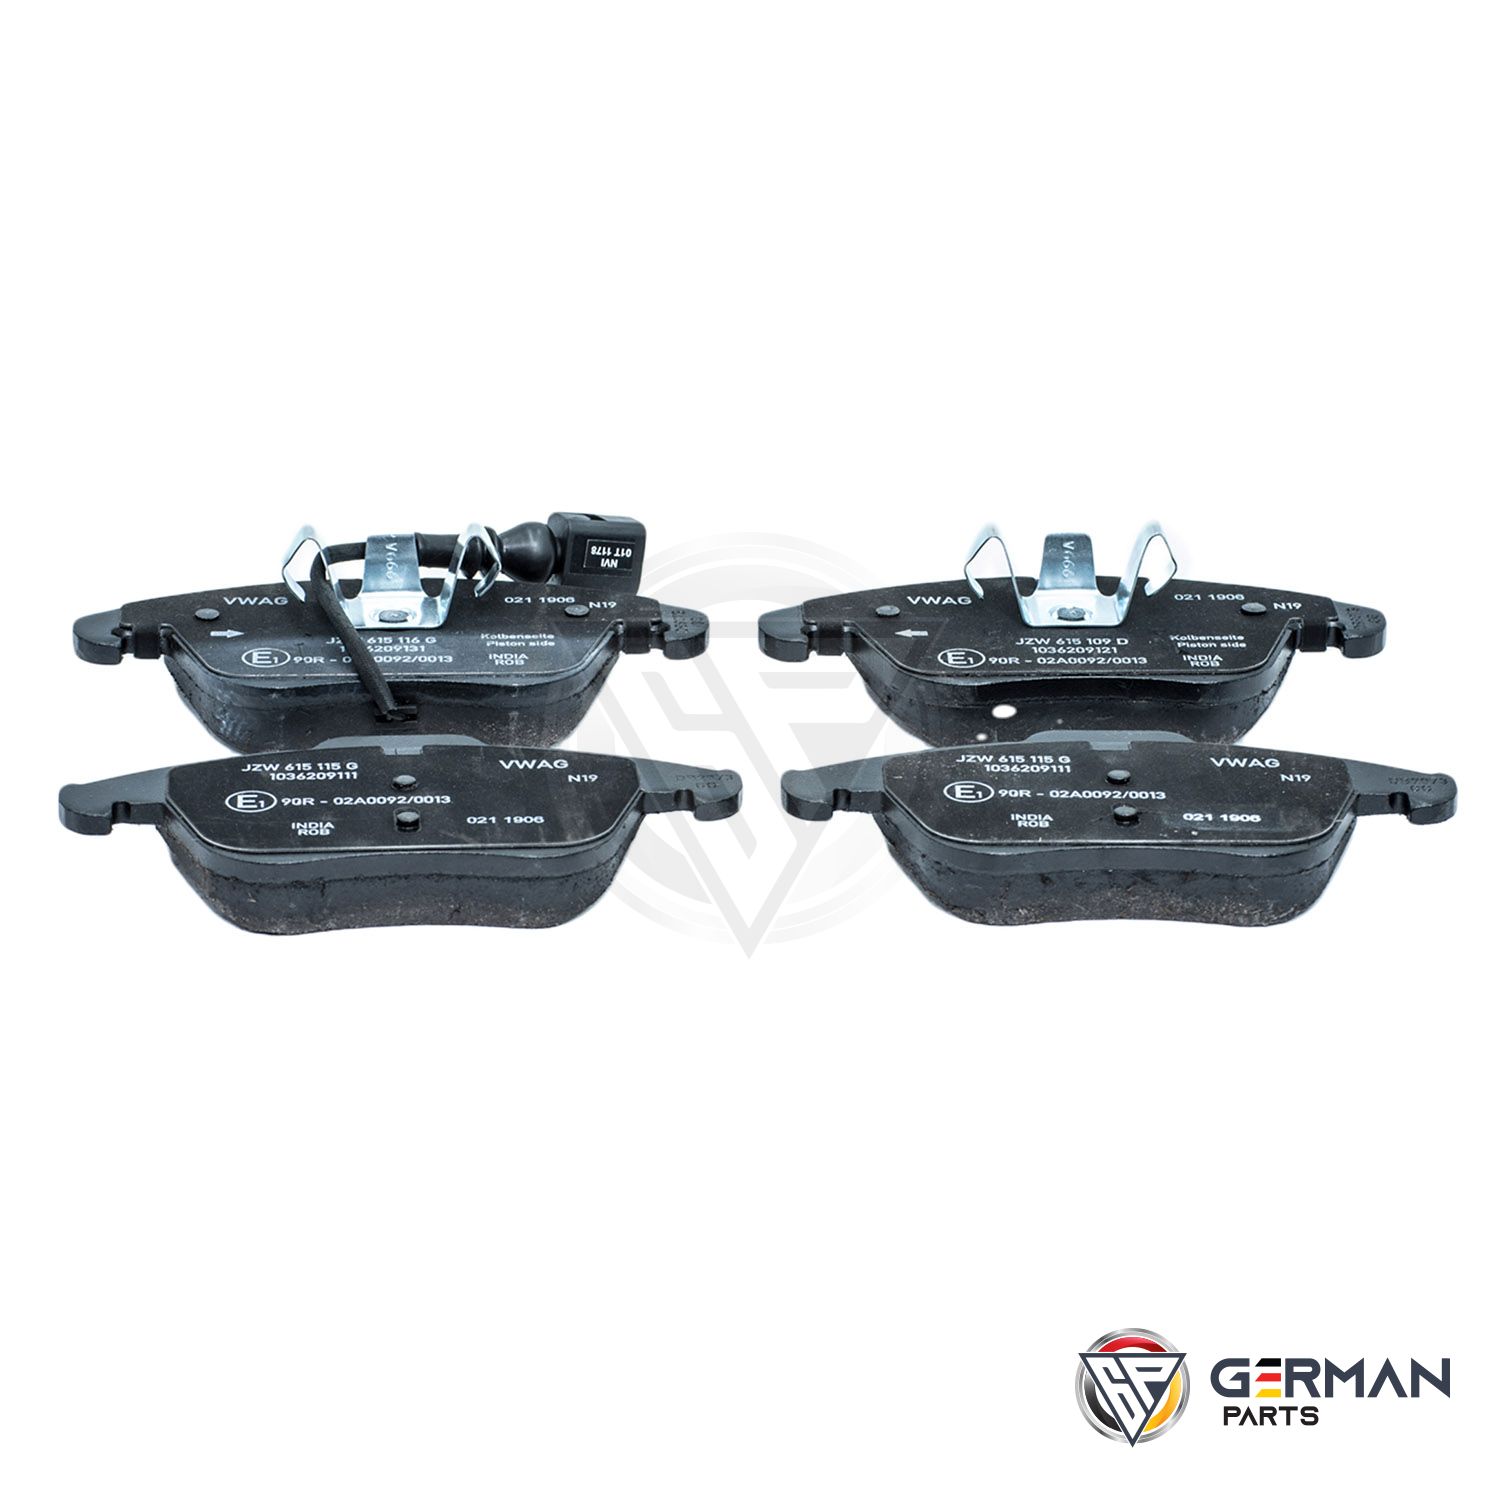 Buy Audi Volkswagen Front Brake Pad Set JZW698151S - German Parts